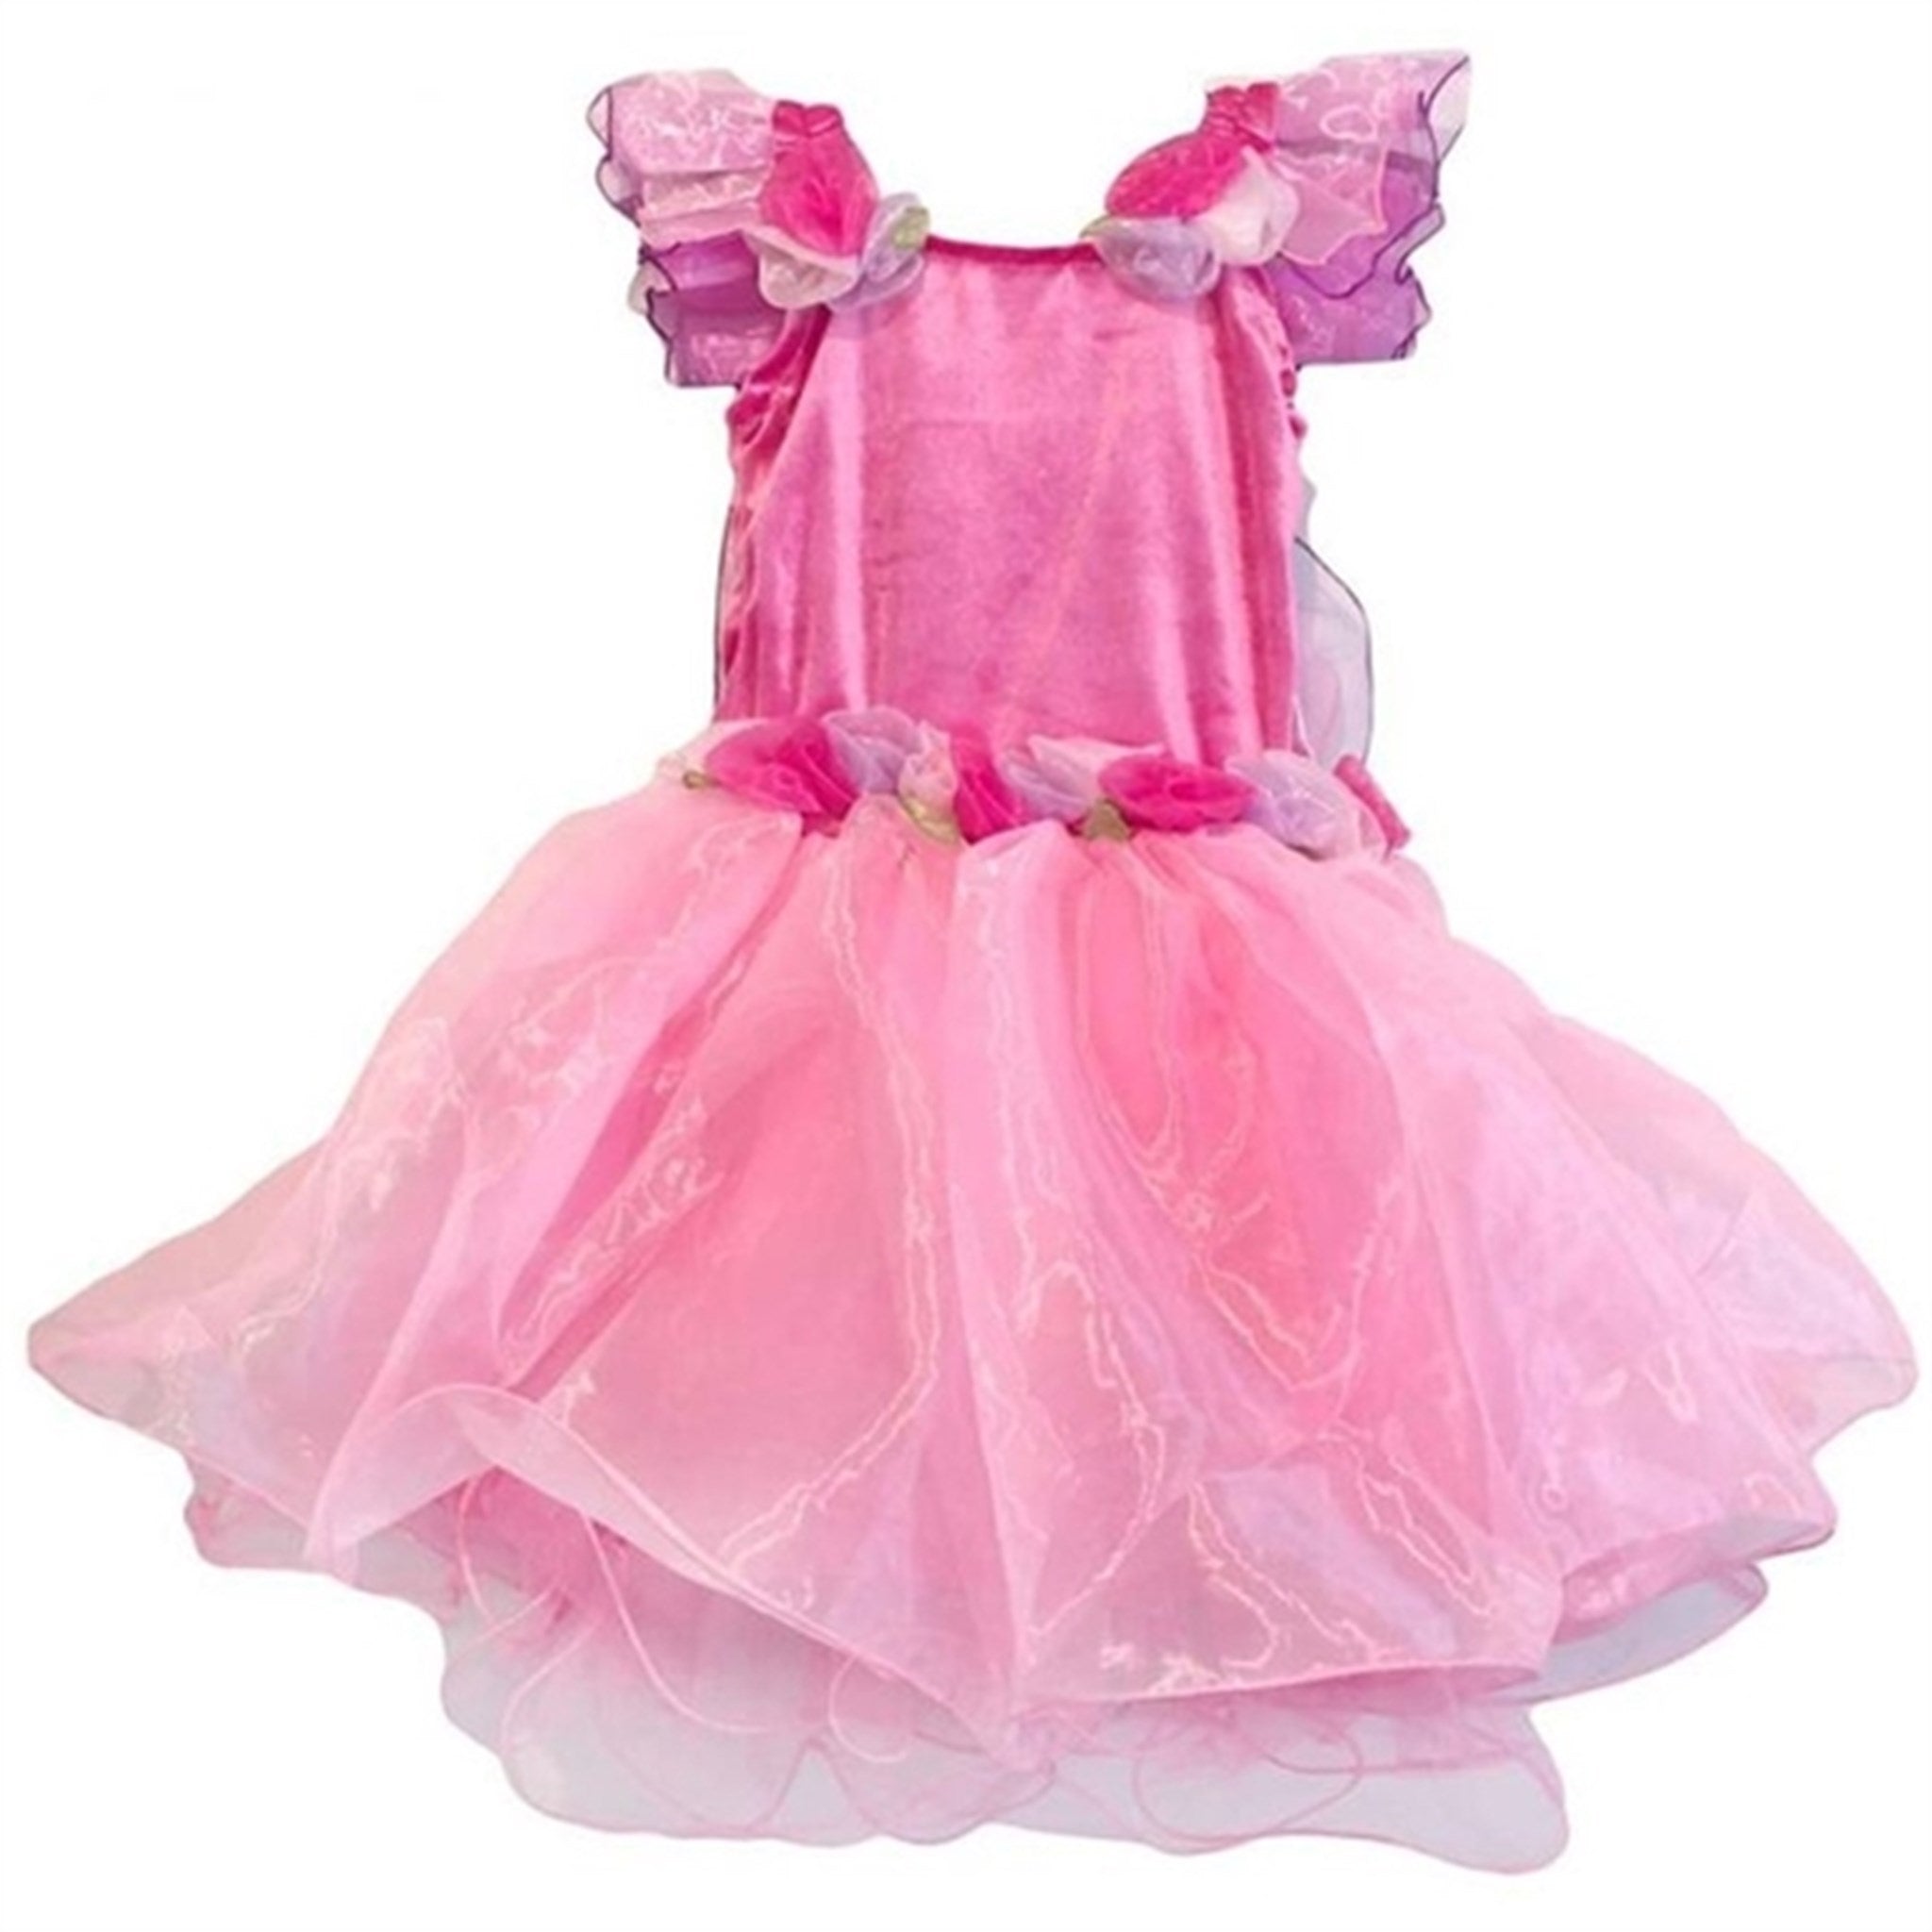 All Dressed Up Dress - Fairy Princess